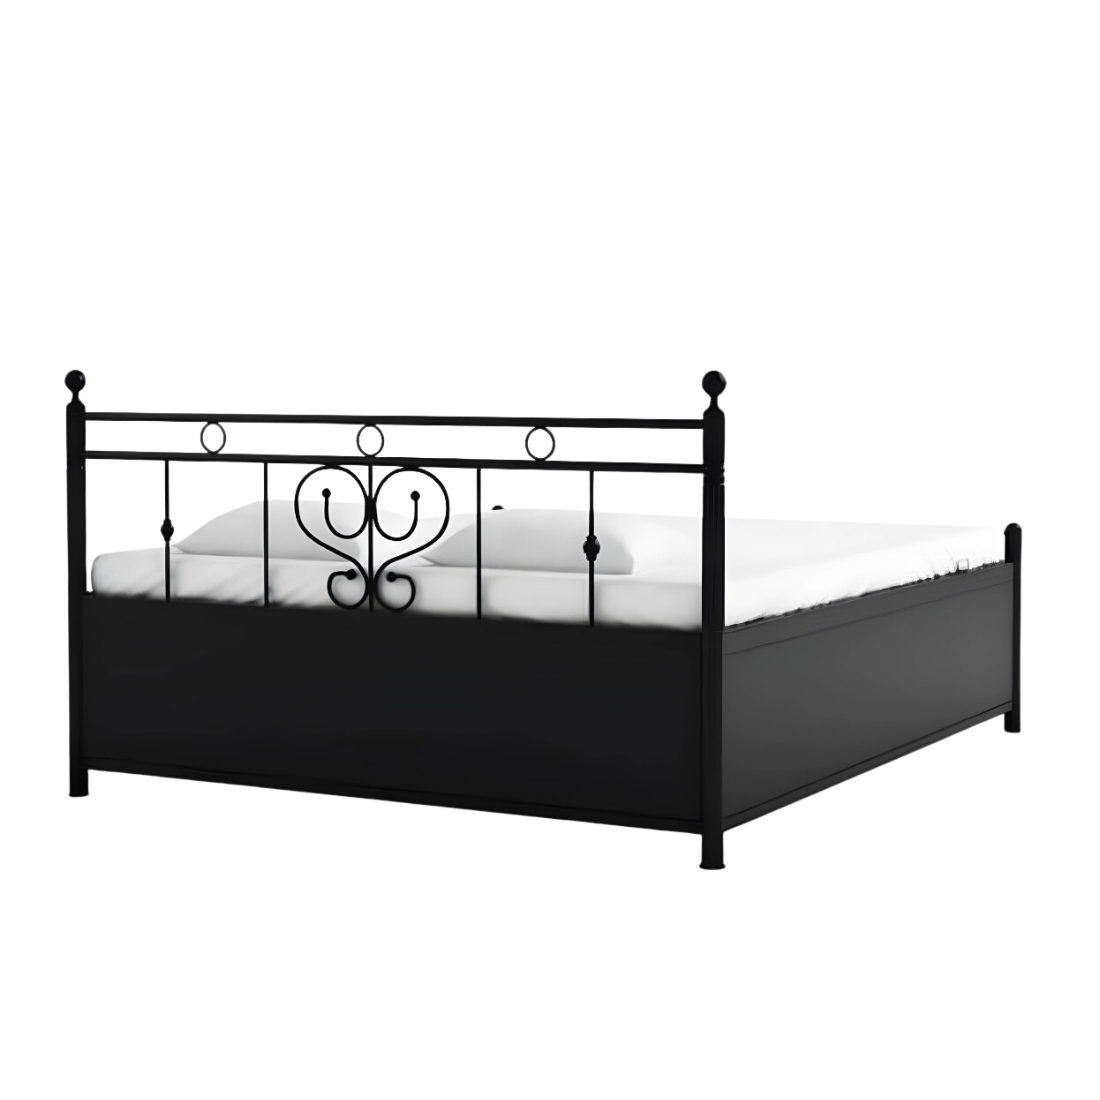 Dustin Hydraulic Storage King Metal Bed (Color - Black) with Designer Headrest